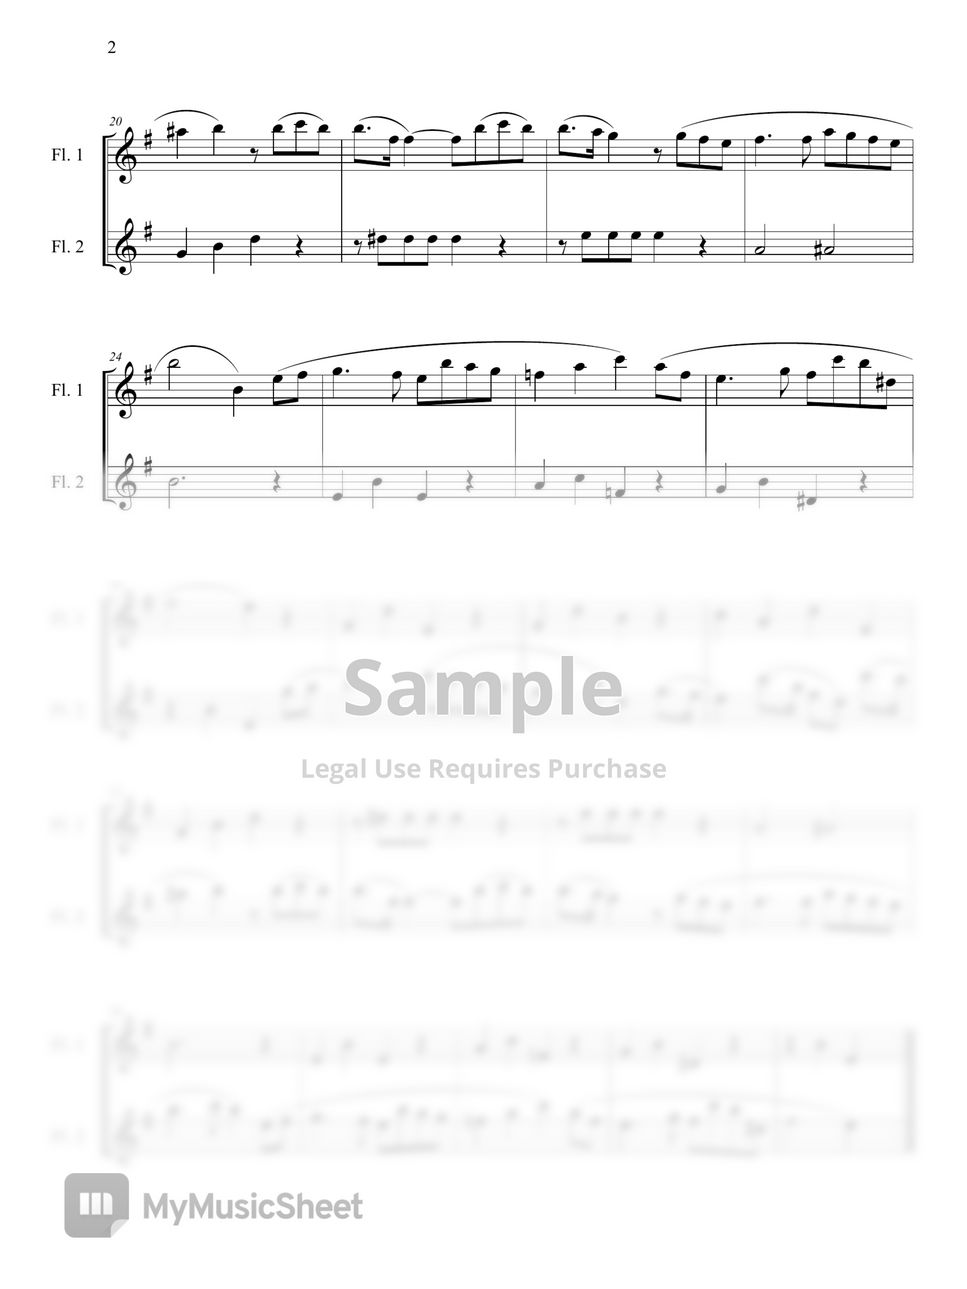 N. Paganini - Violin Sonata Op.3 No.6 (플룻 듀엣, 파가니니 바이올린 소나타, Flute Duet) (플룻 듀엣) by 바론아트